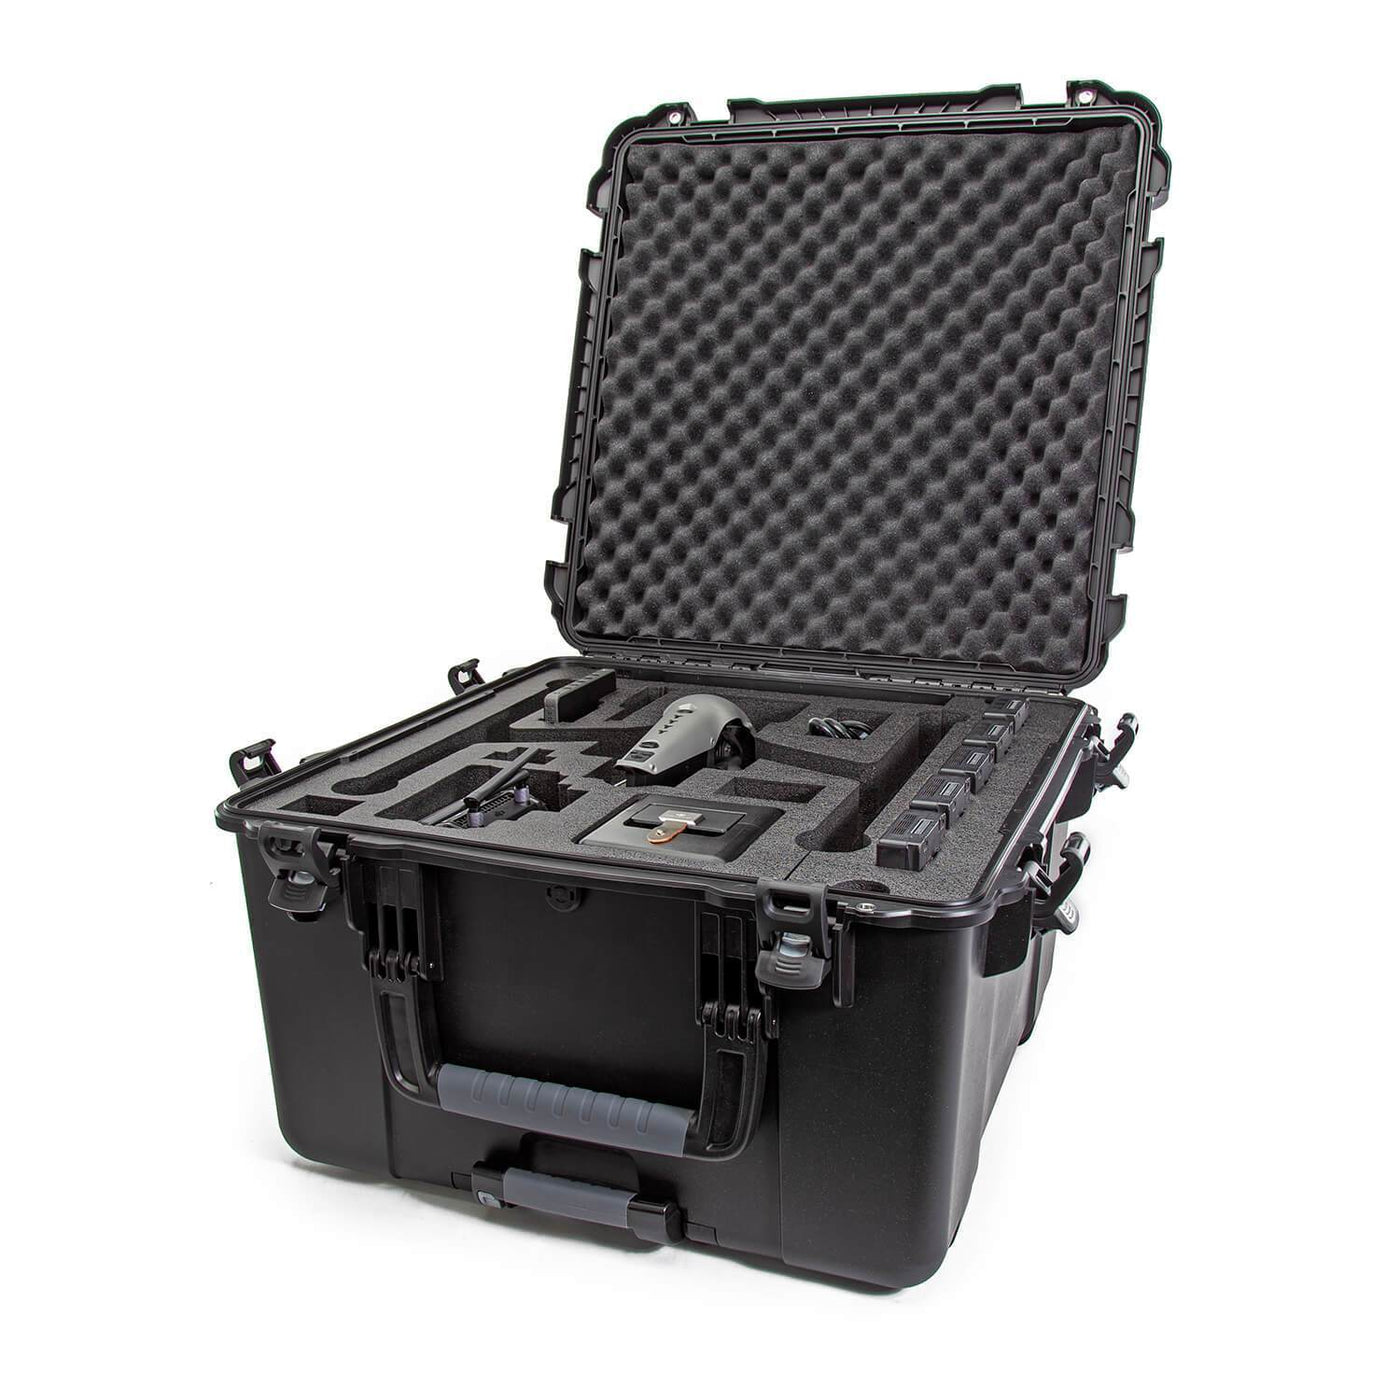 NANUK 970 For DJI 2 Hard Case - Fast Shipping - NEW! – NANUK USA